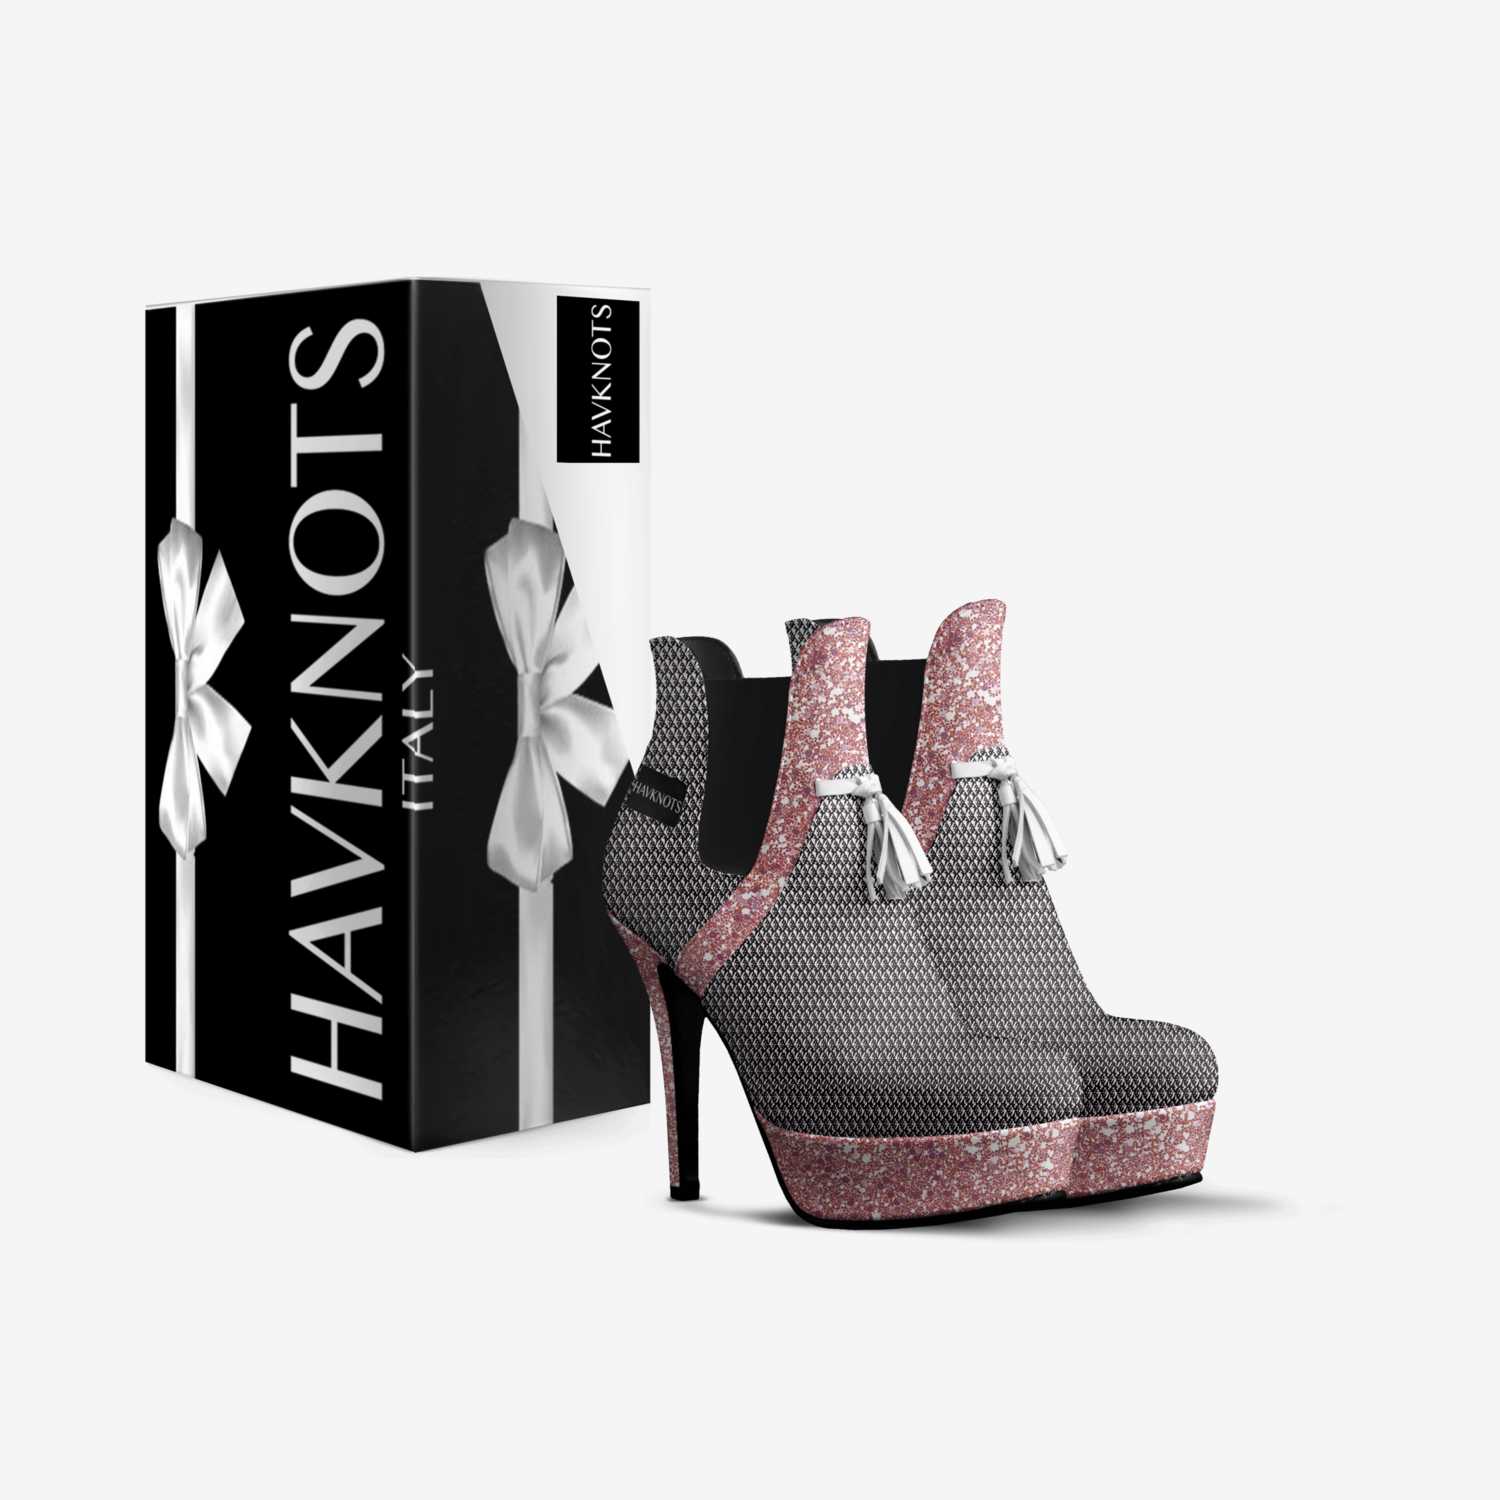 Havknot lavish101 custom made in Italy shoes by Tobais Woods | Box view